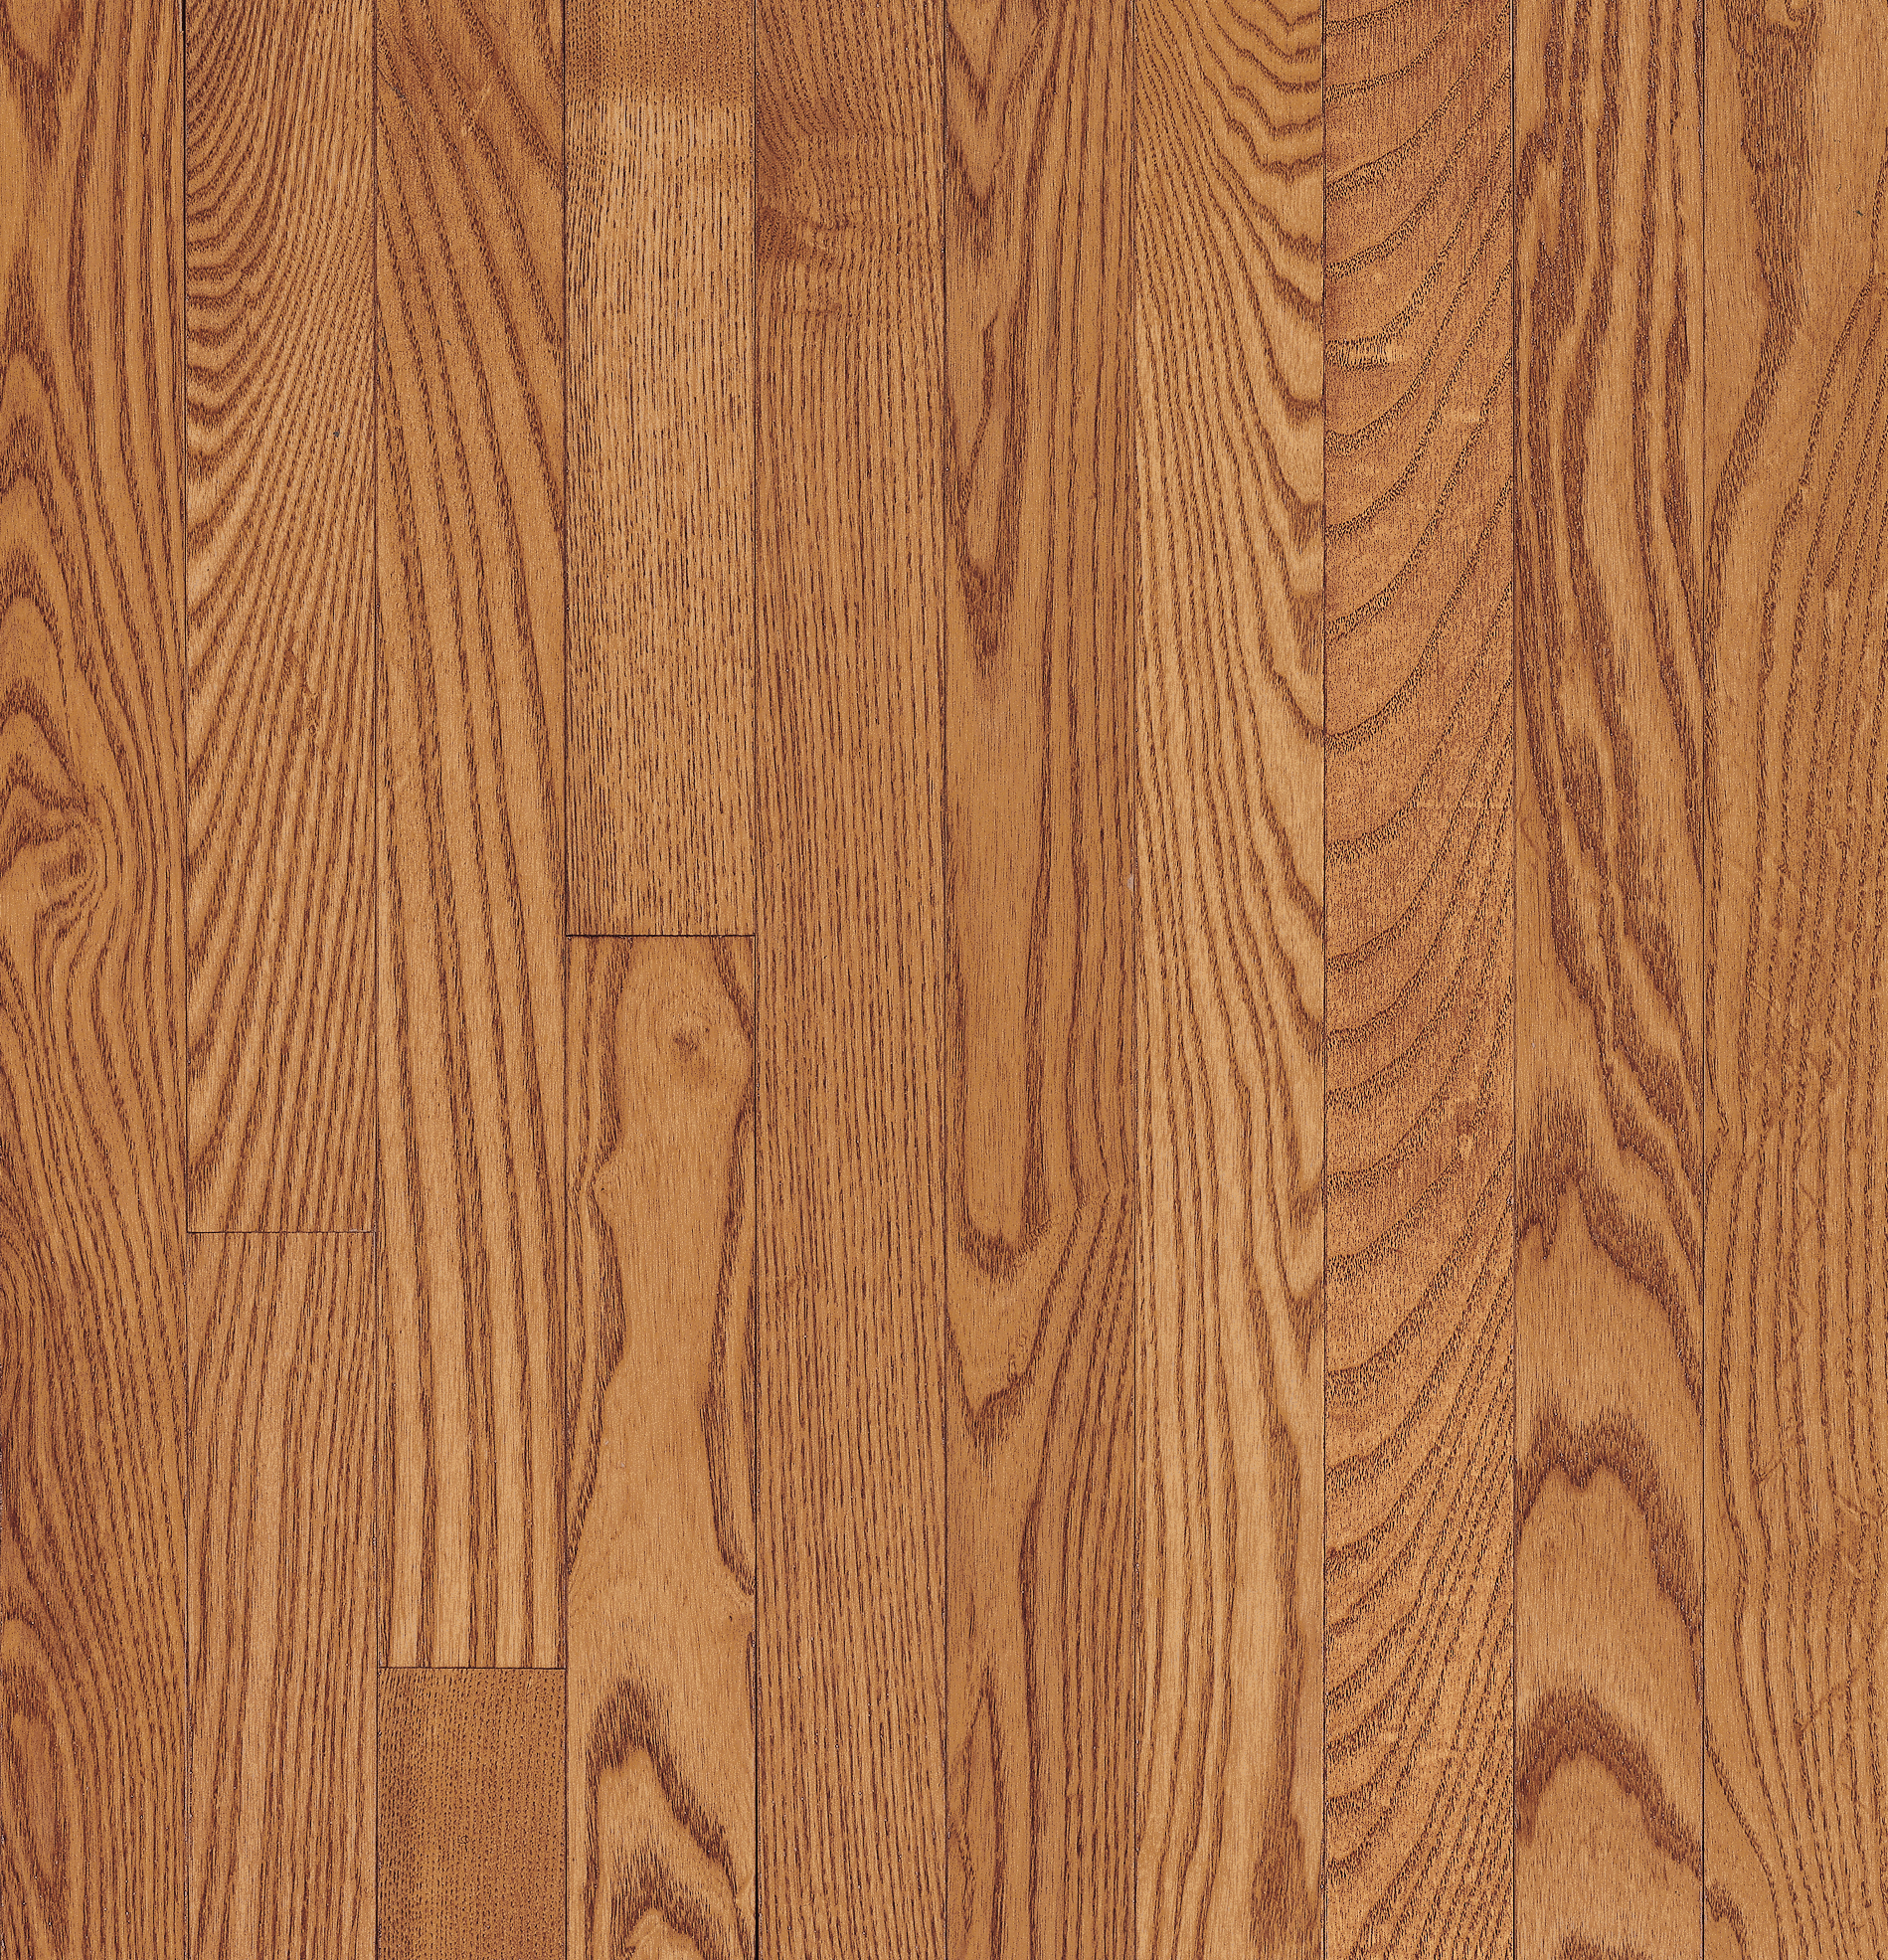 Oak Solid Hardwood Cb216, Bruce Glue Down Hardwood Floors